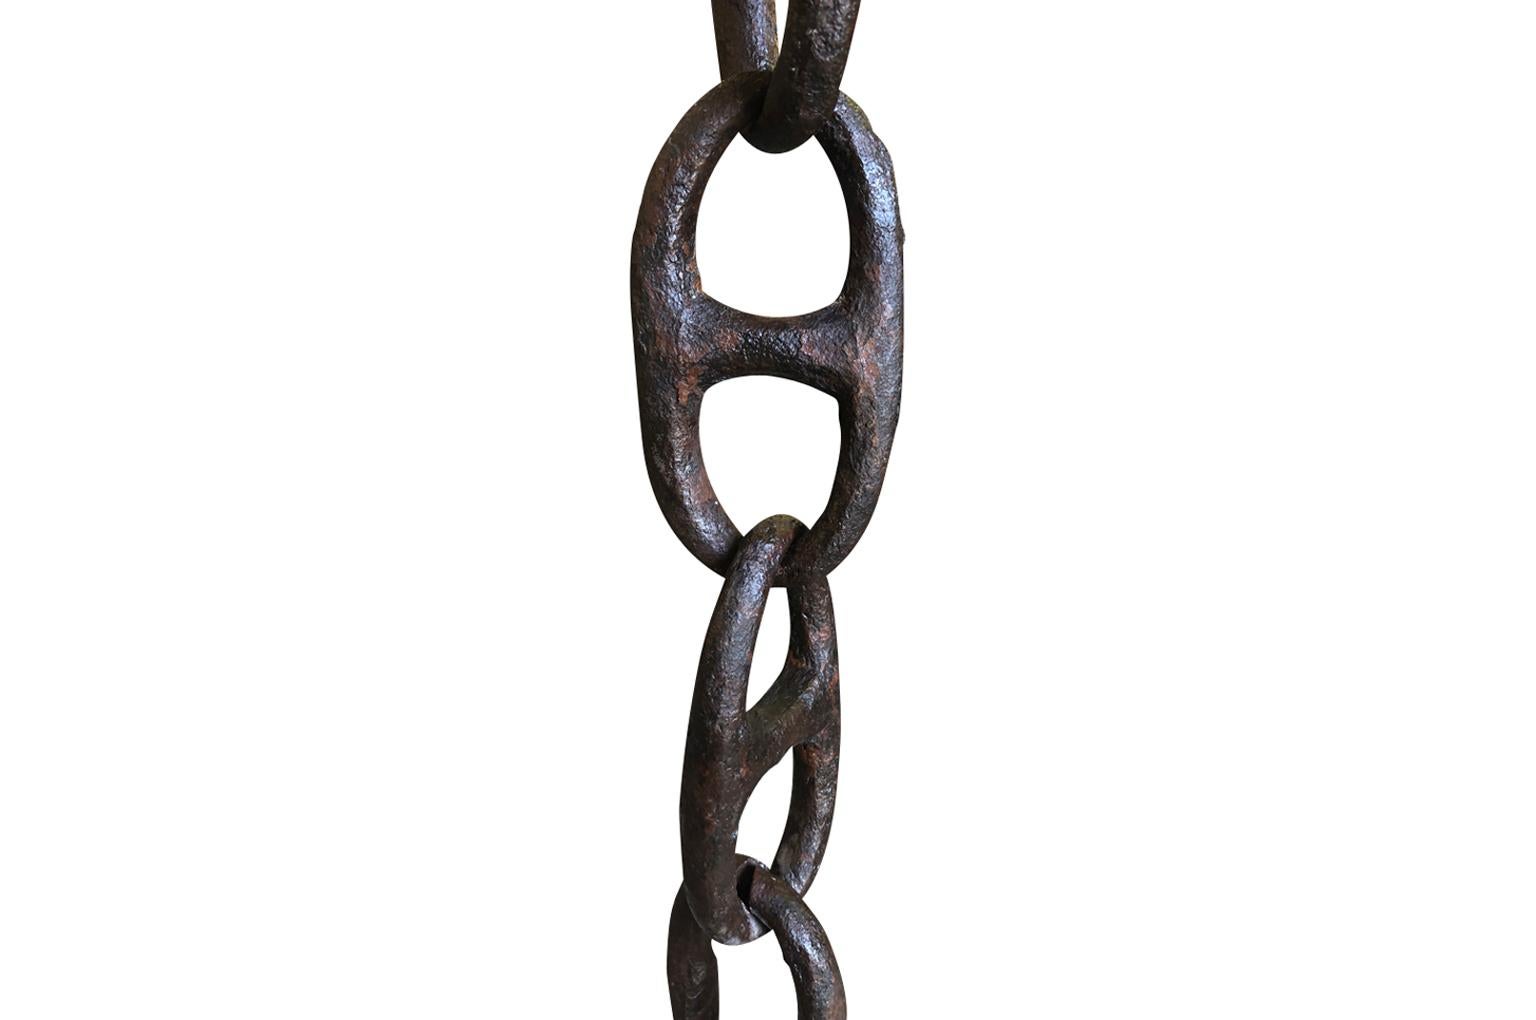 cast iron chain